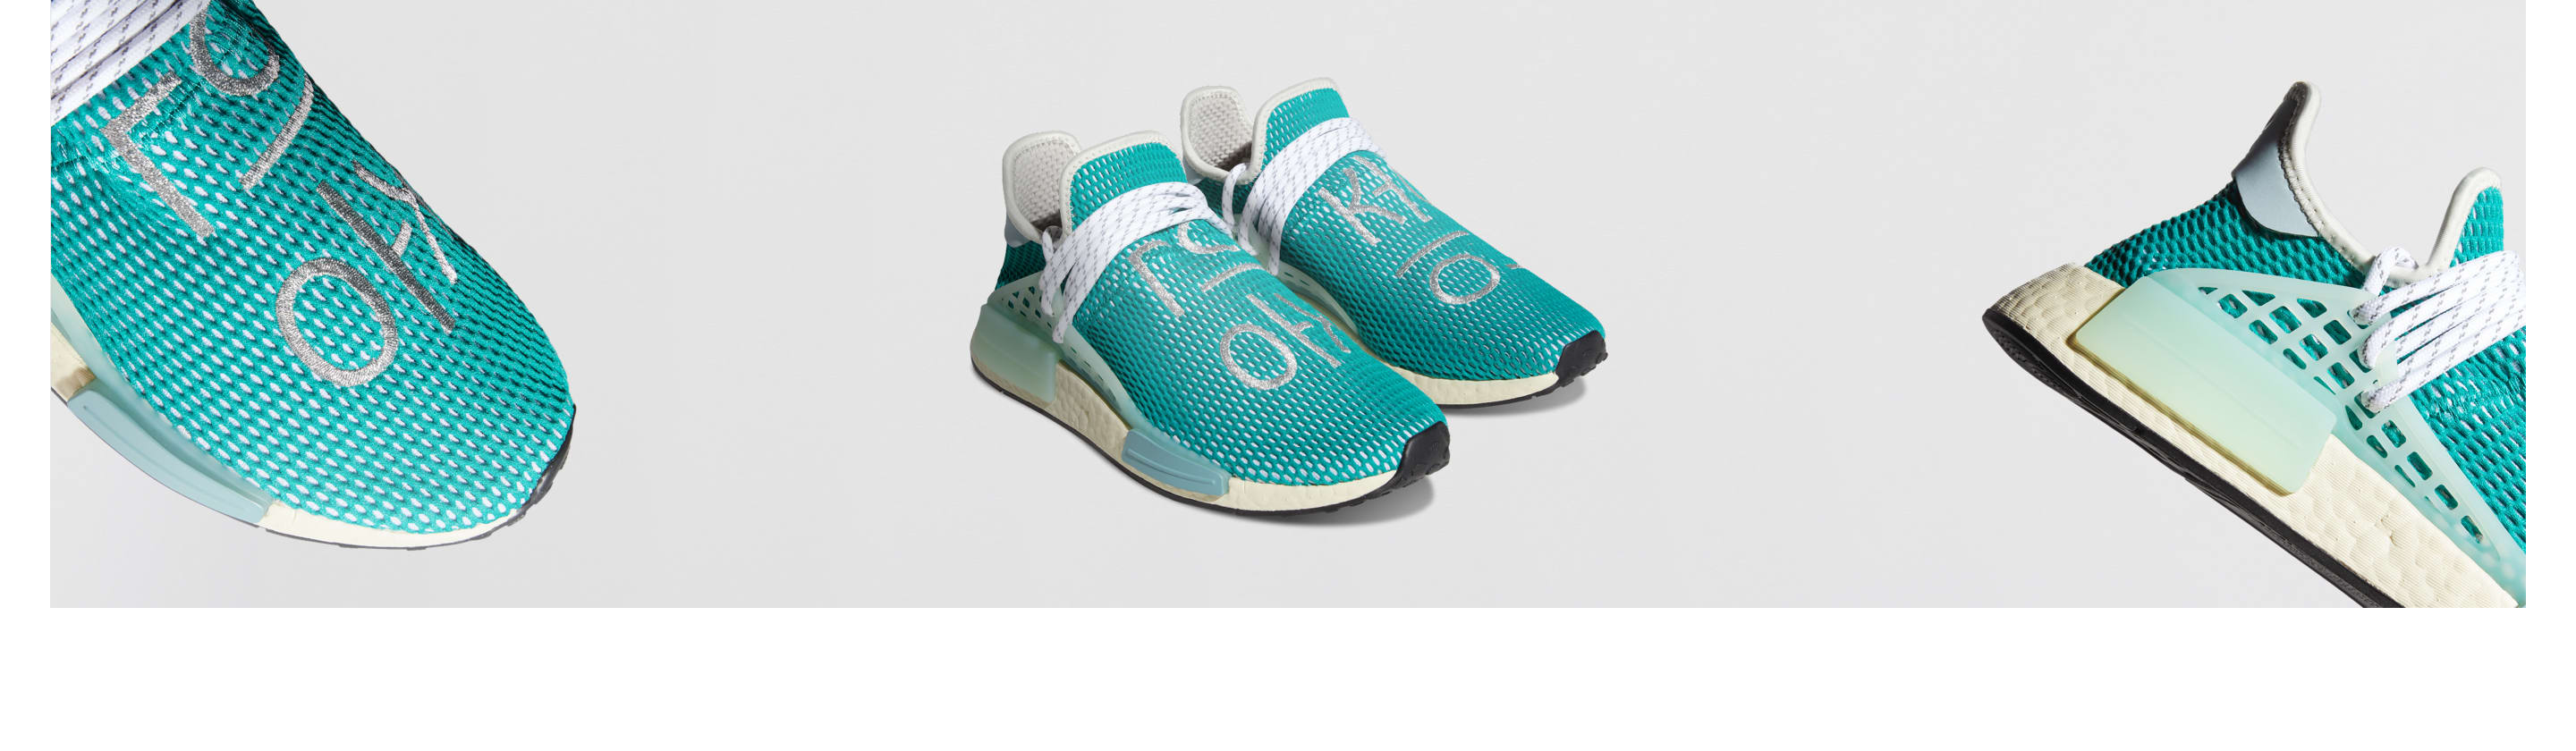 Pharrell Sneakers, Tennis Shoes 